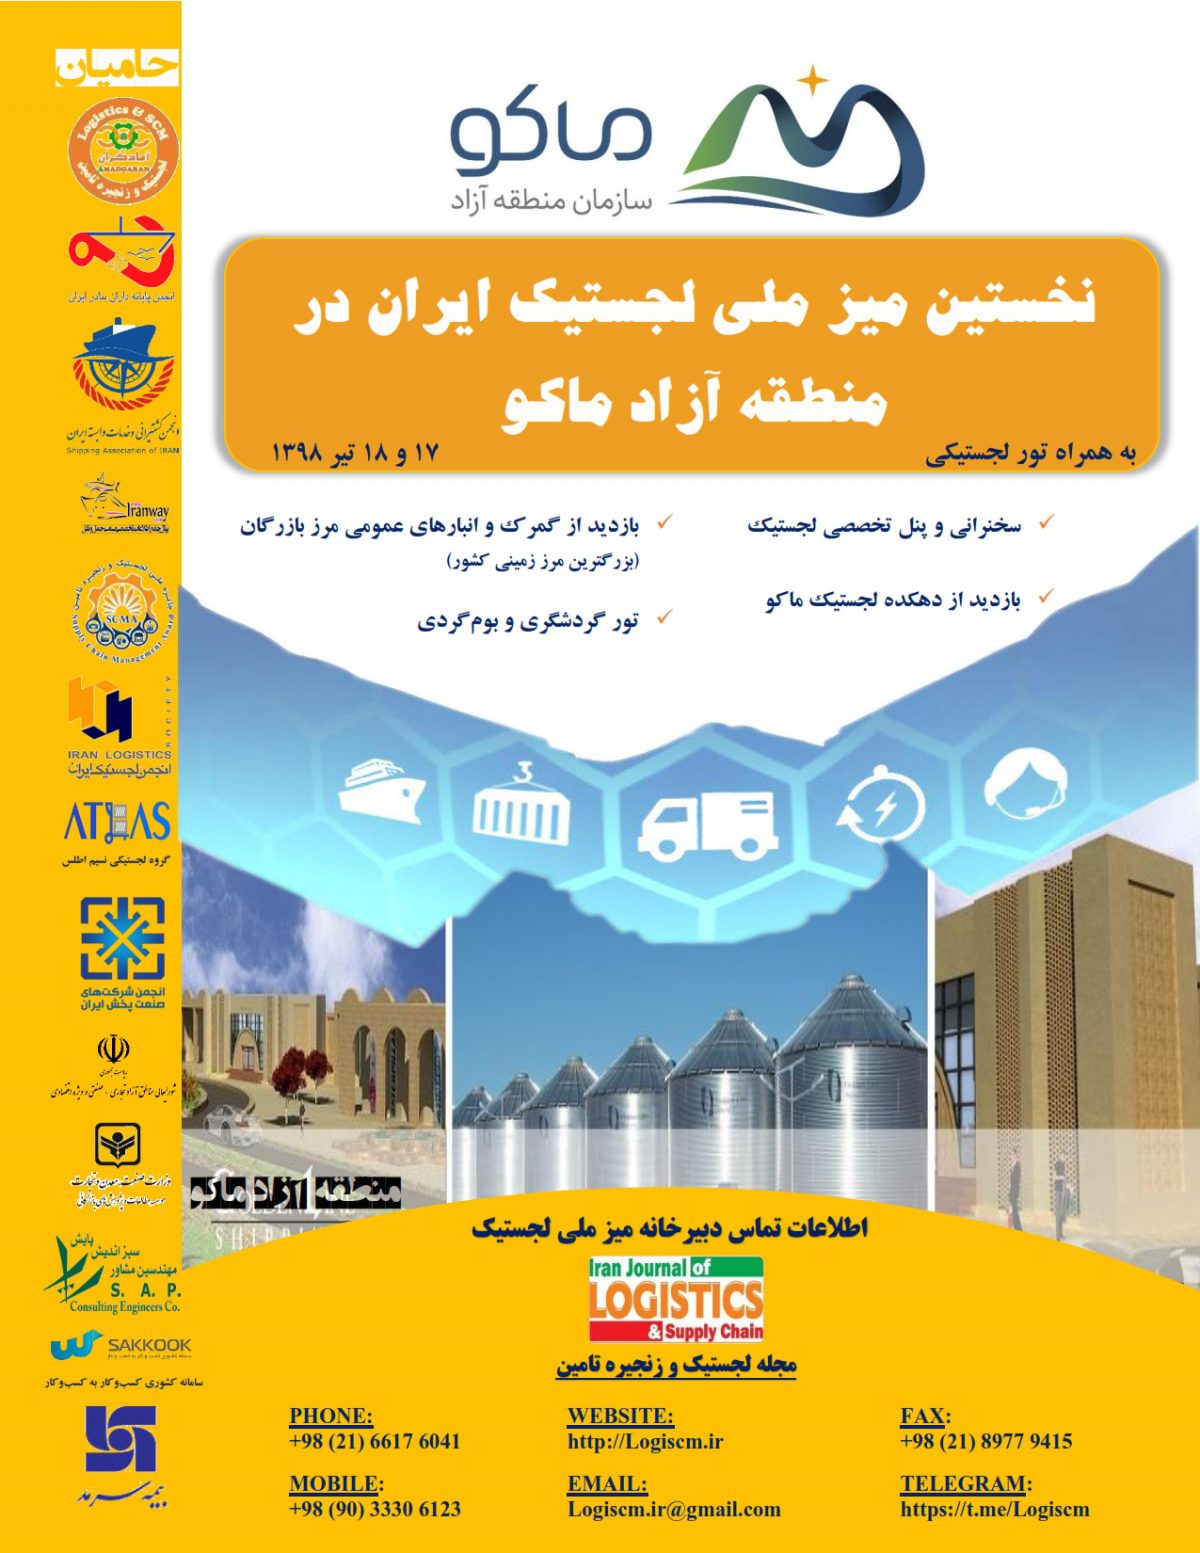 The first Iran's National Logistics Symposium